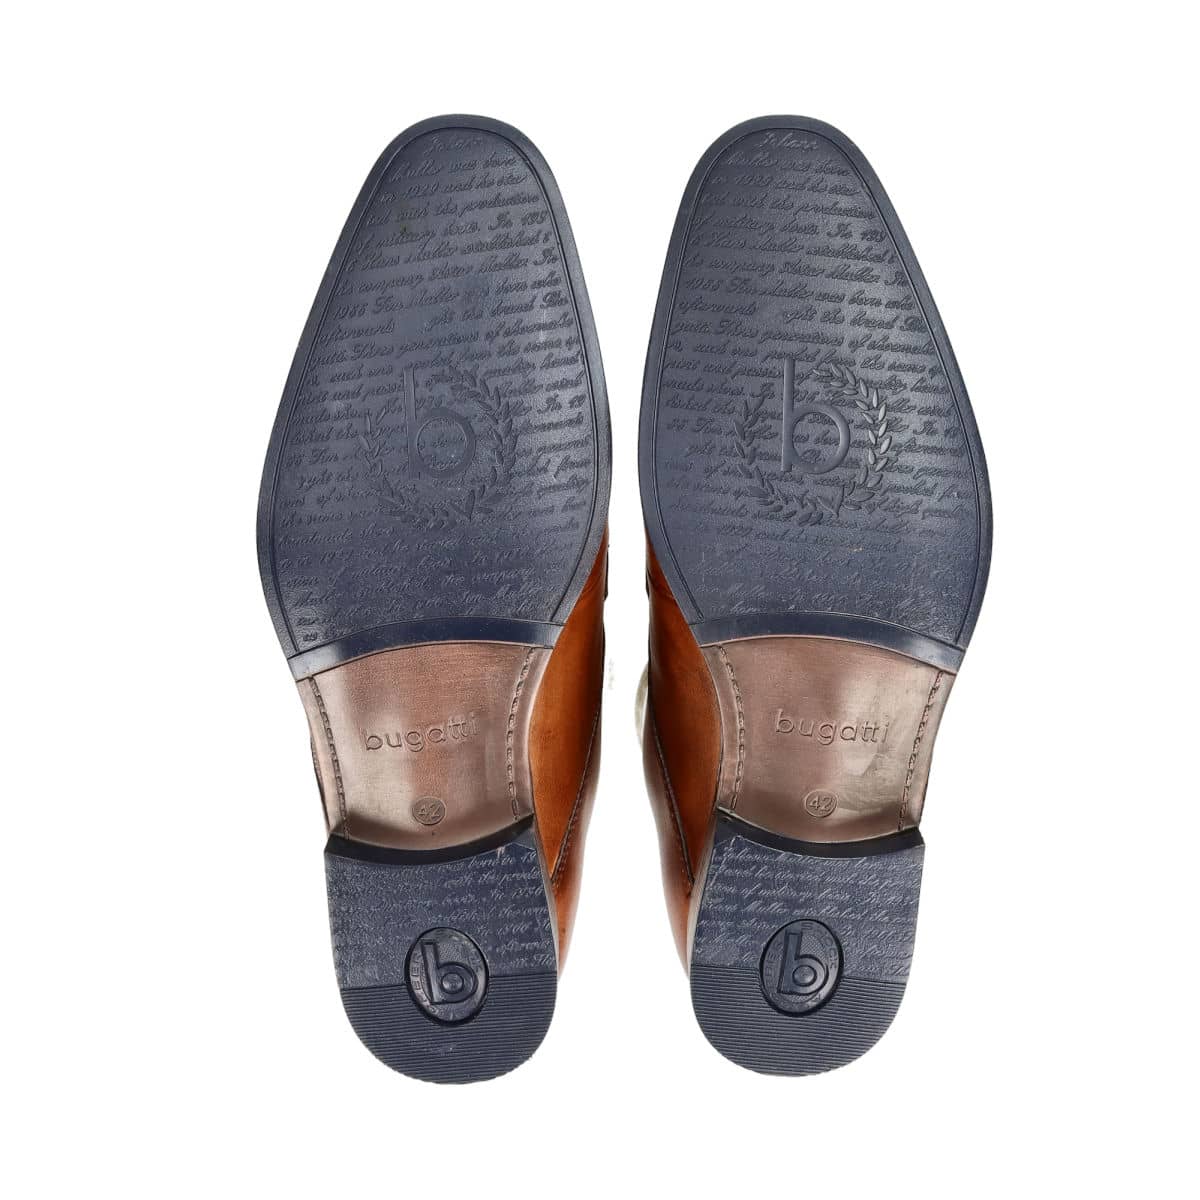 Bugatti men\'s leather formal - cognac shoes brown